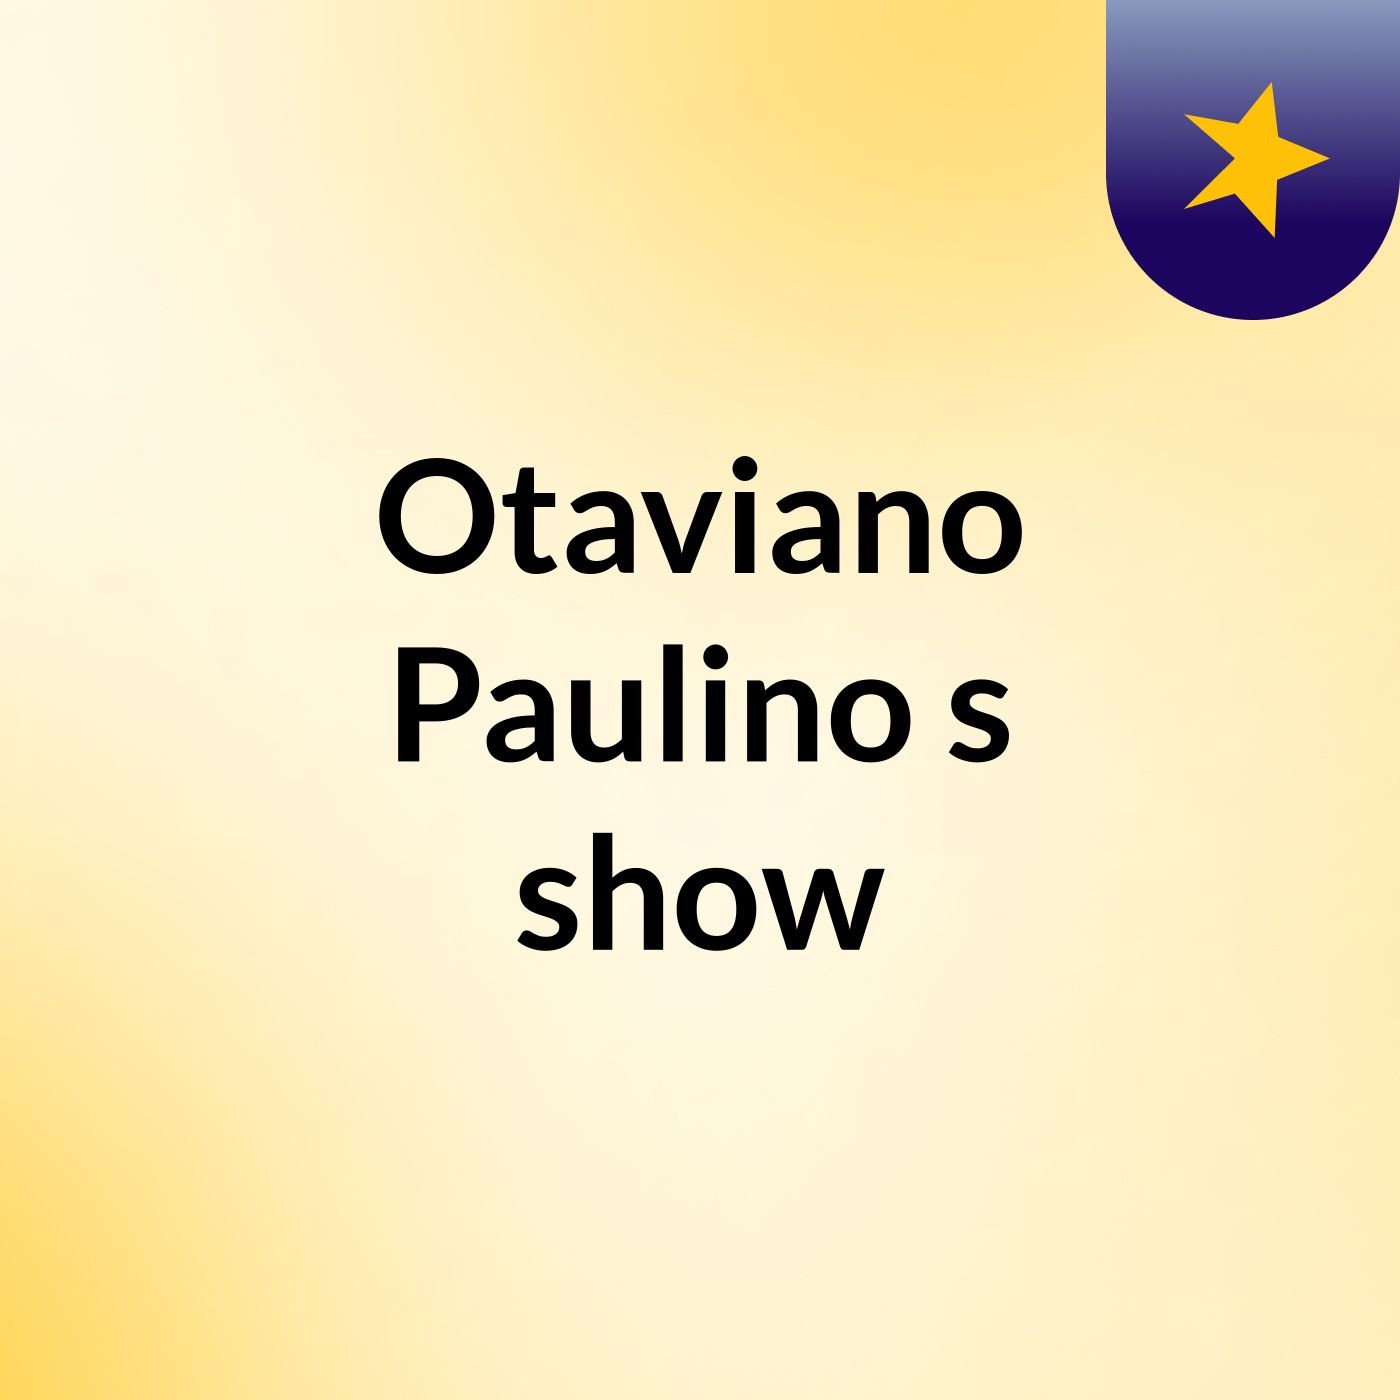 Episódio 10 - Otaviano Paulino's show